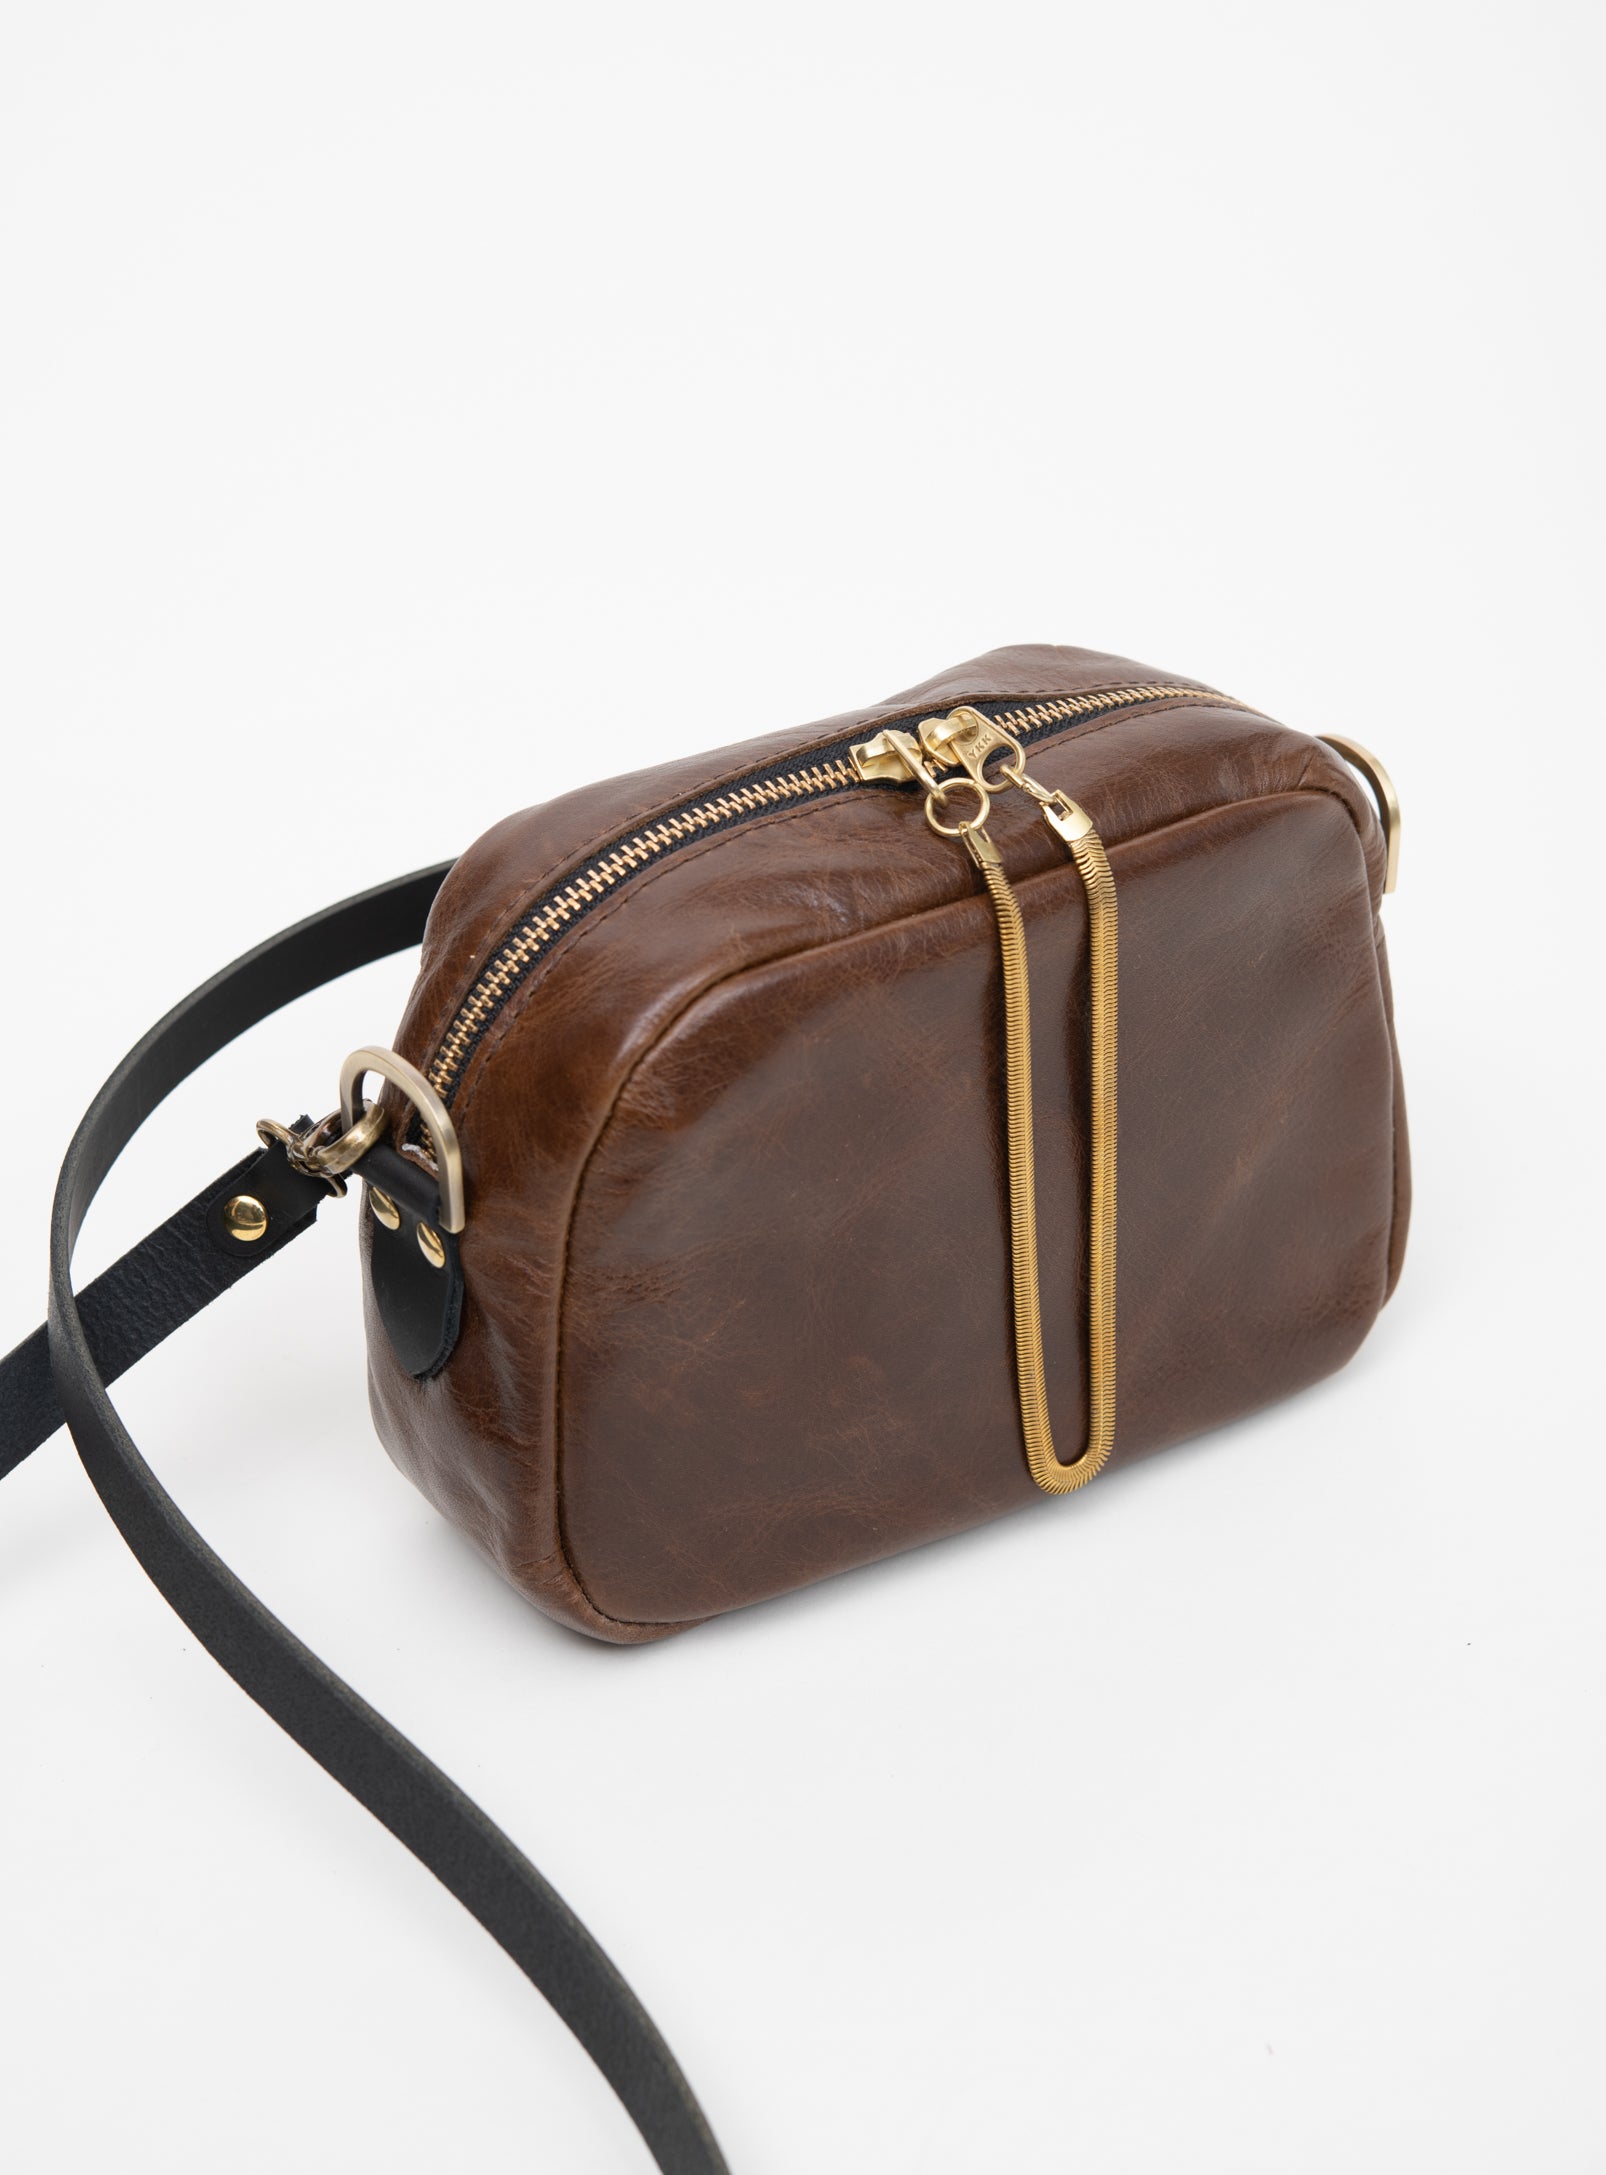 Veinage Cartier cognac leather crossbody bag